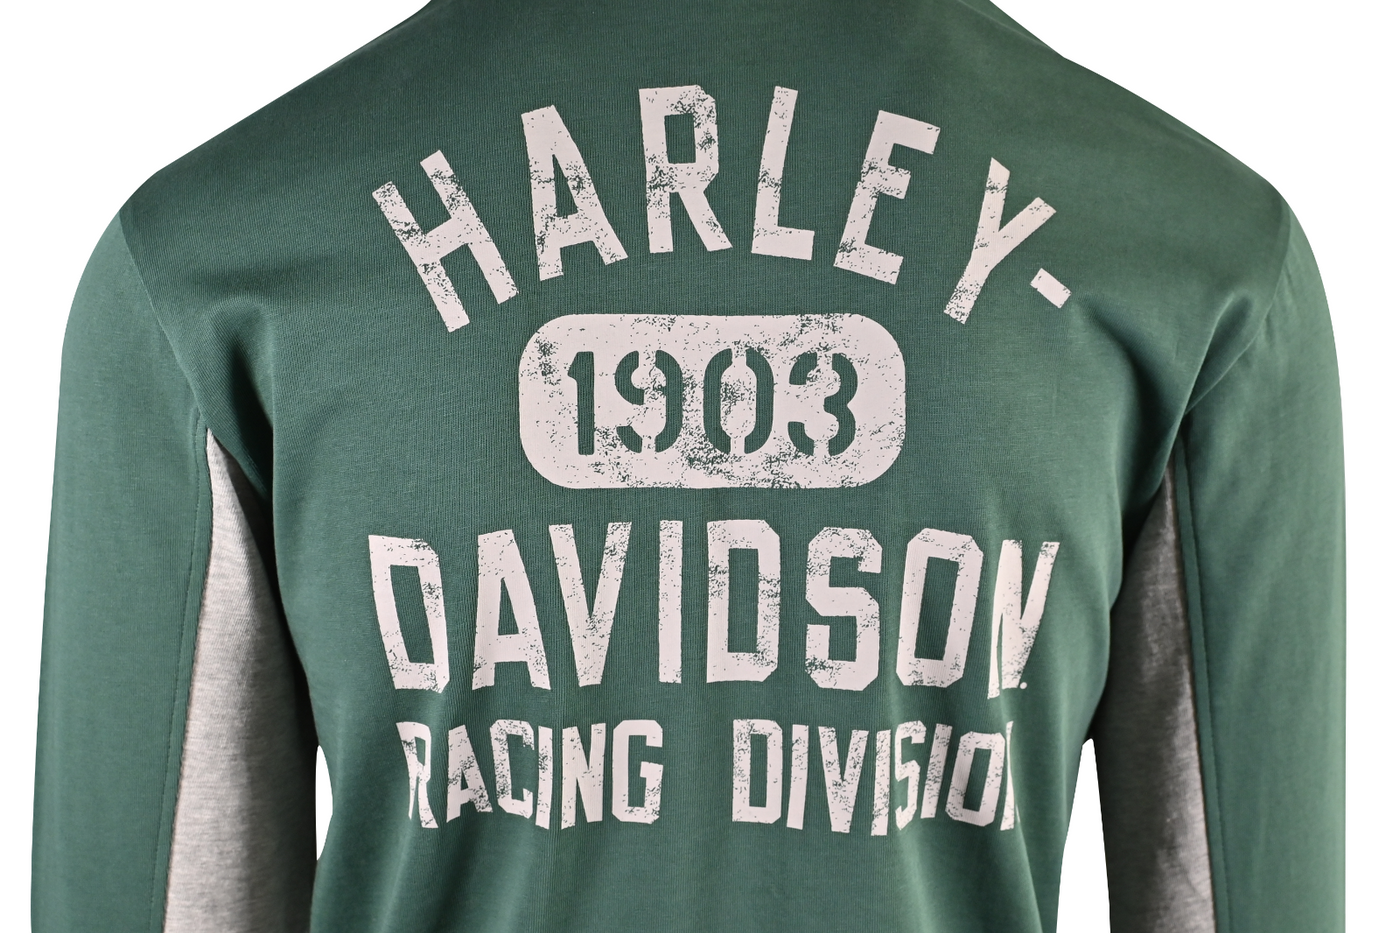 Harley-Davidson Men's T-Shirt Bistro Green Racing Bar & Shield Long Sleeve (S35)